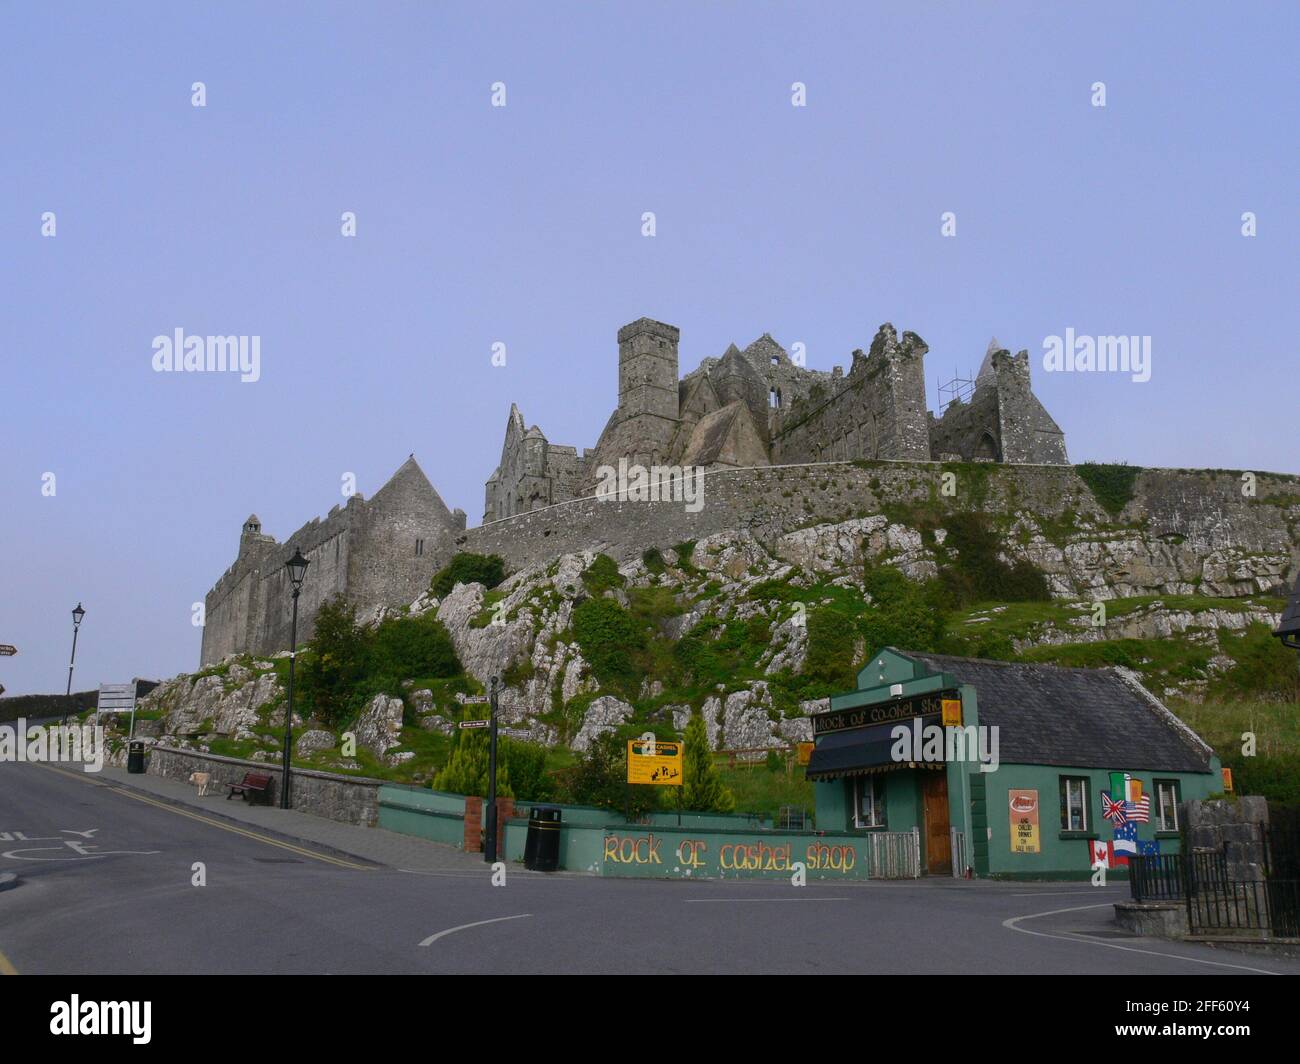 IRELAND, COUNTY TIPPERARY, CASHEL - SEPTEMBER 25, 2008: Rock of Cashel in Ireland Stock Photo